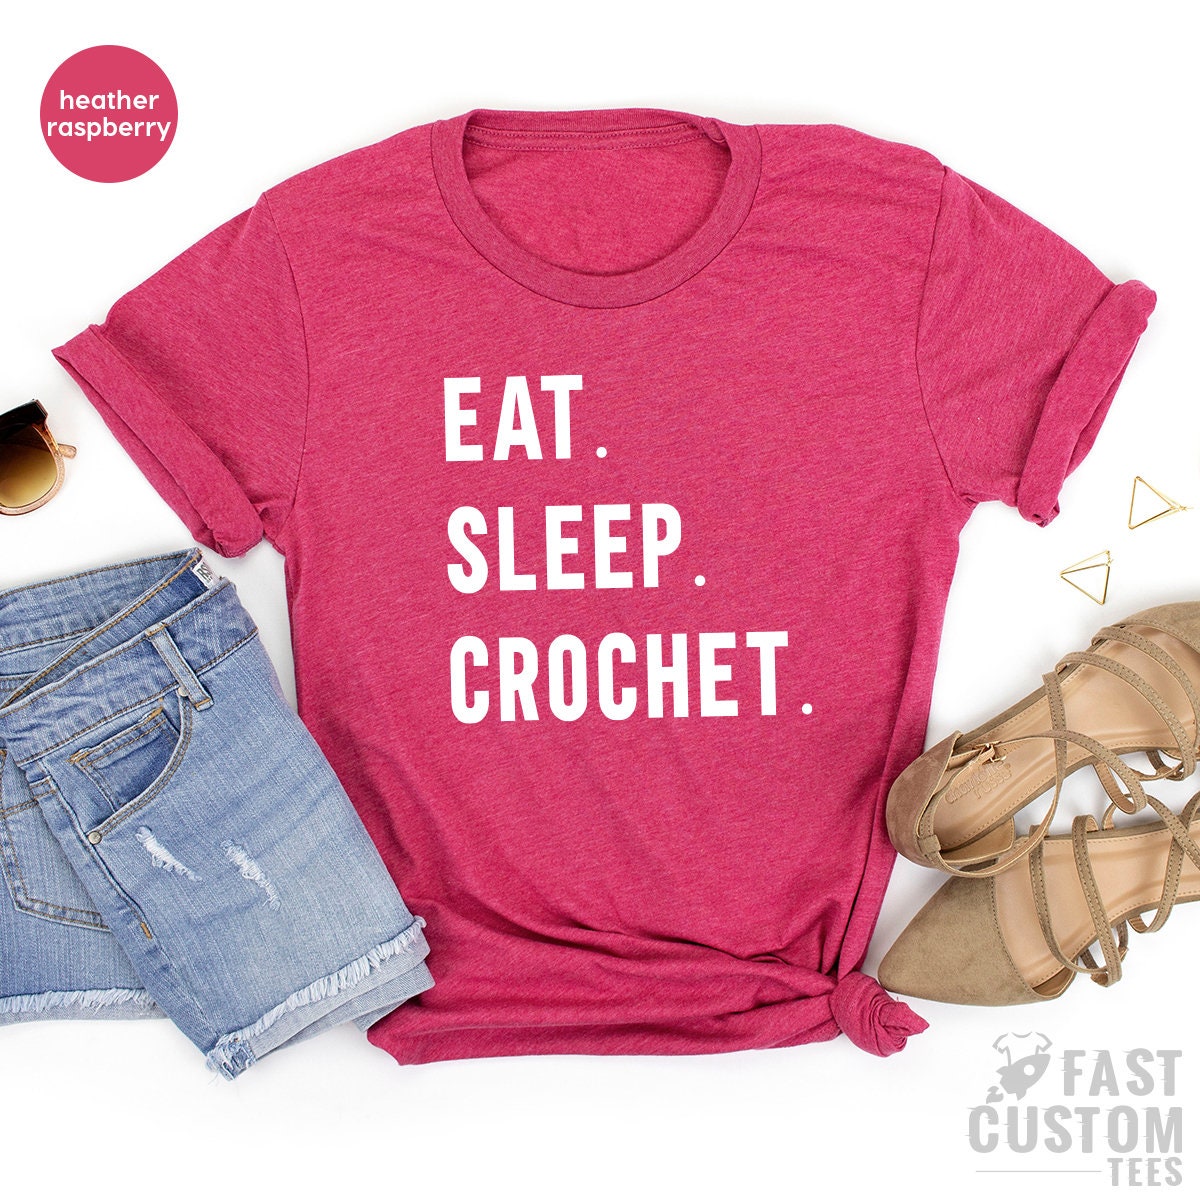 Funny Crochet Shirt, Crochet TShirt, Eat Sleep Crochet Tee, Funny Women Shirt, Crocheting Shirt, Crochet Hook Shirt, Crafting Shirts - Fastdeliverytees.com